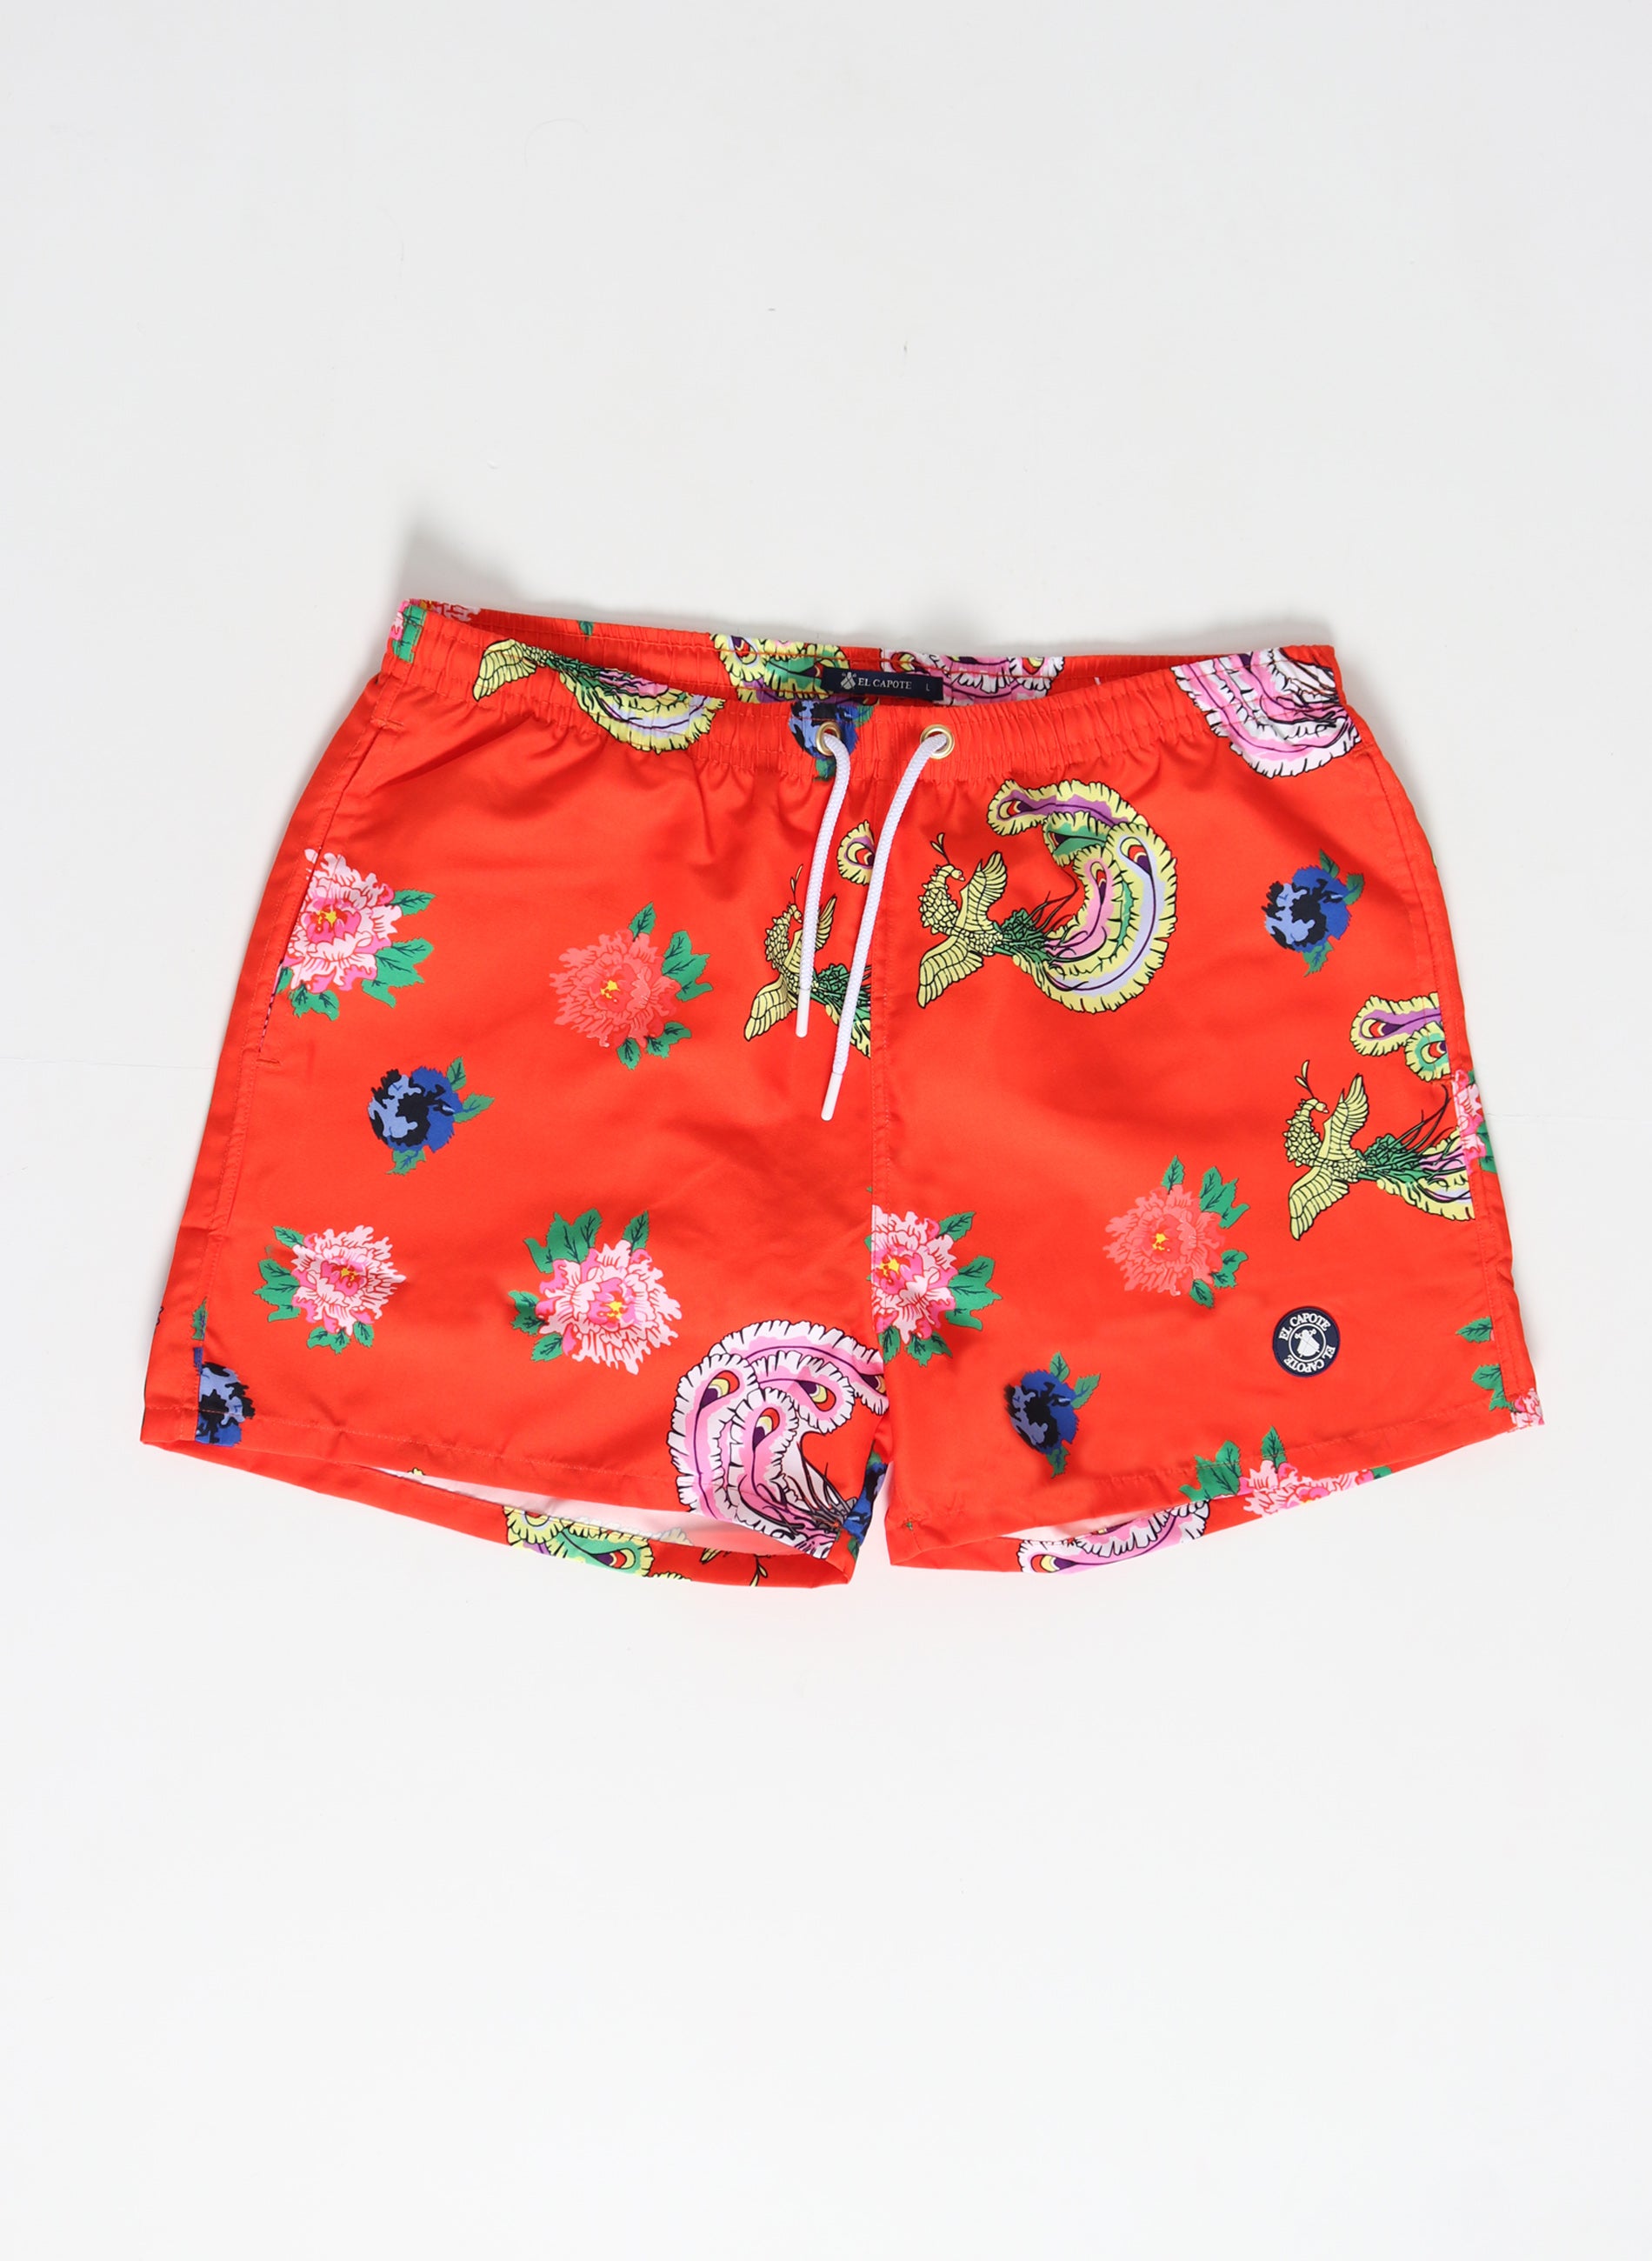 Men's Orange Amebas and Flowers Swimsuit